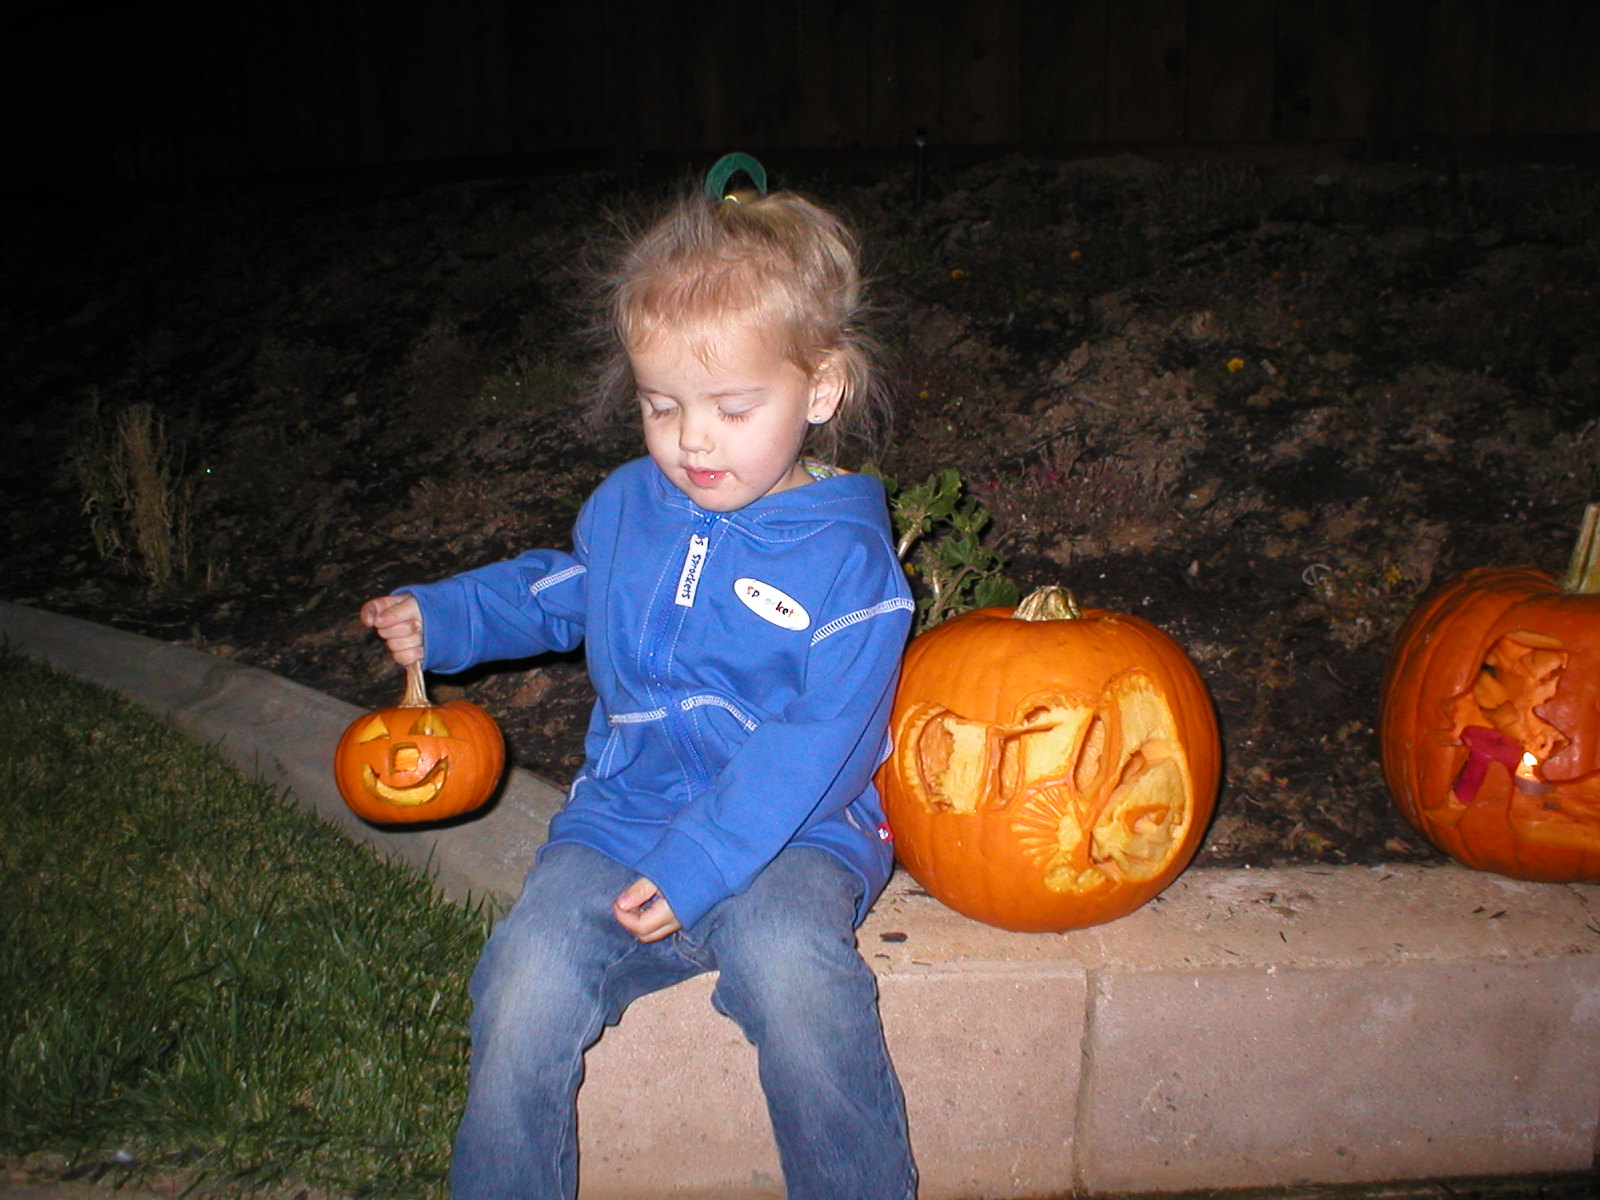 Kaylin and her pumpkin